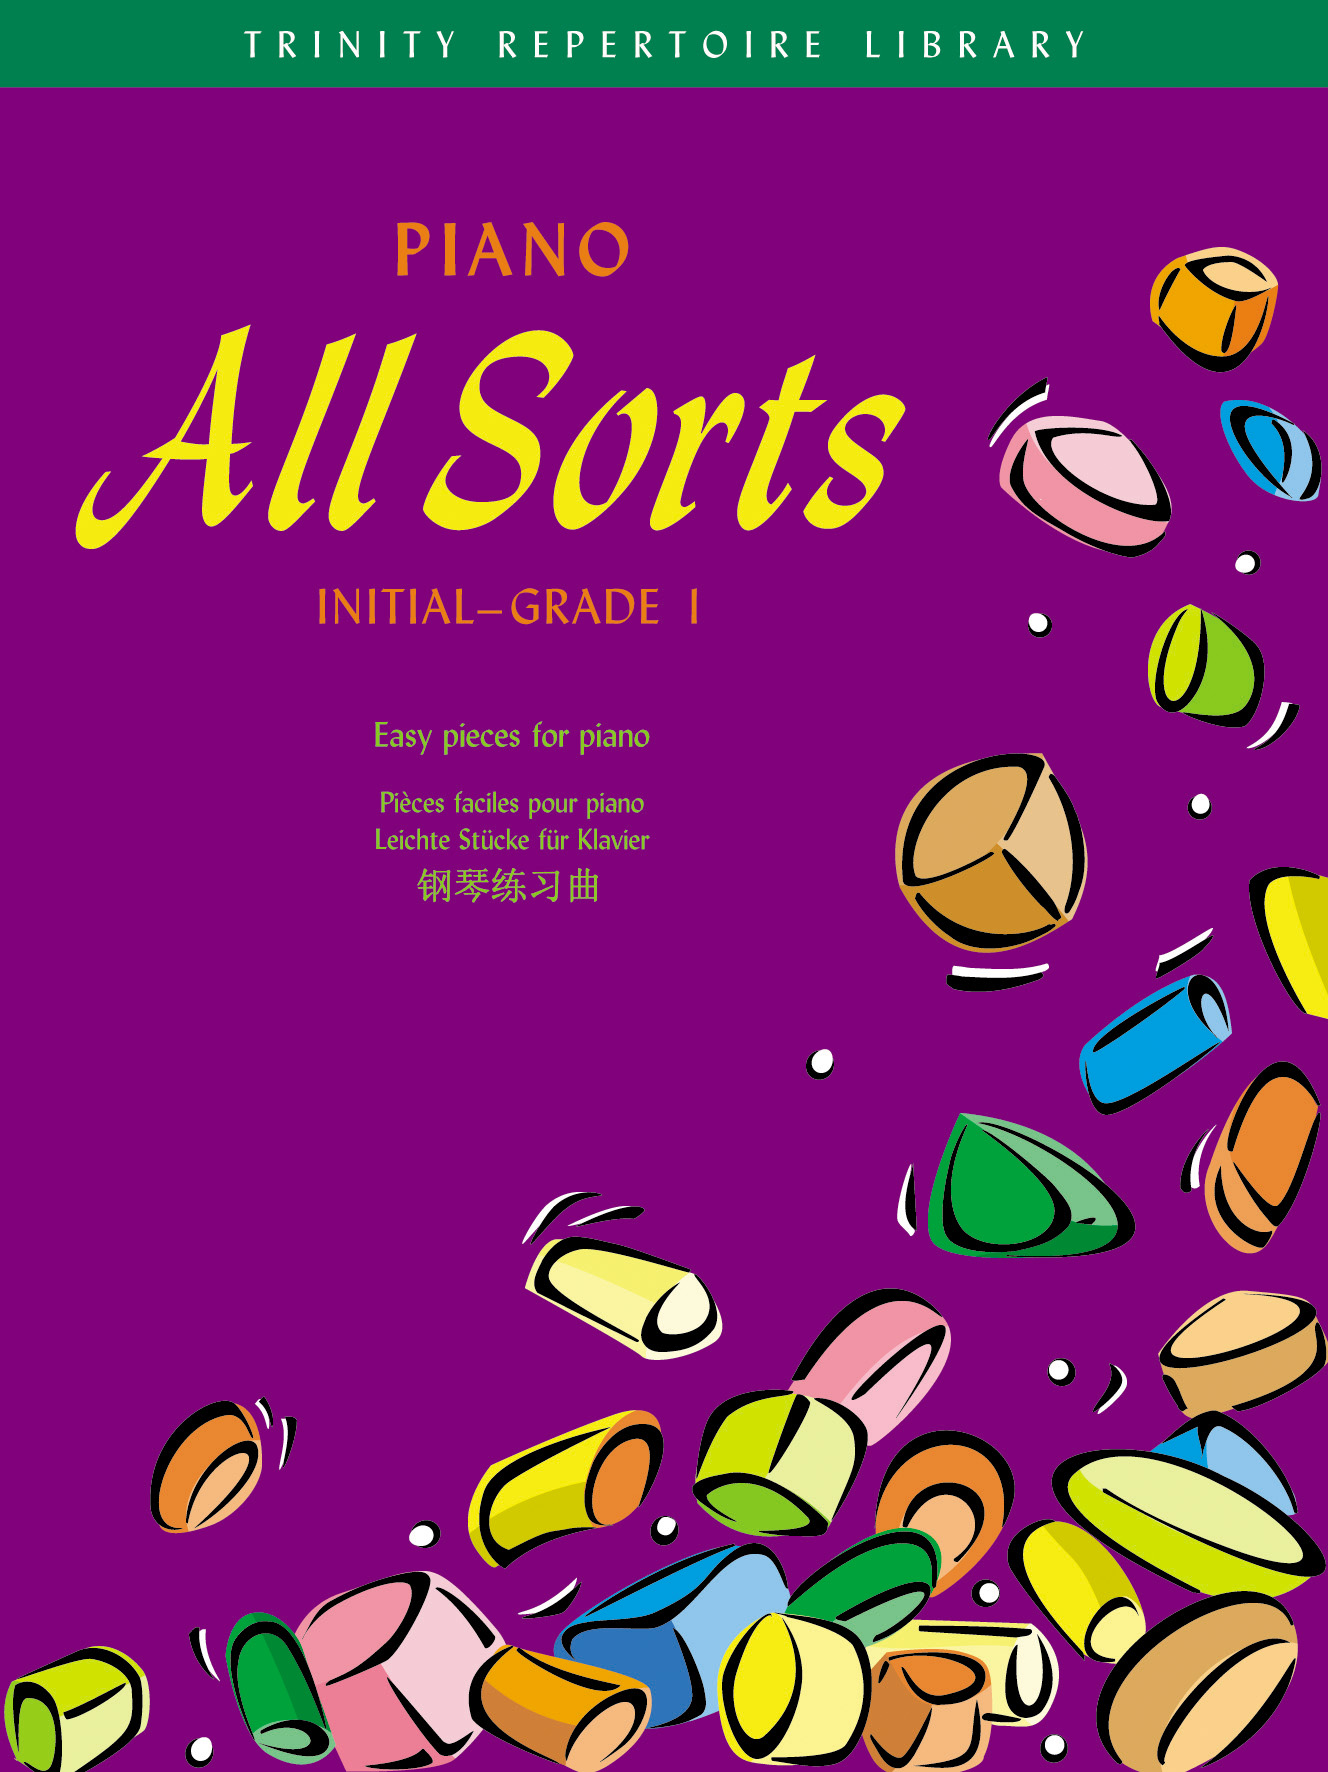 Piano All Sorts (Initial-Grade 1)